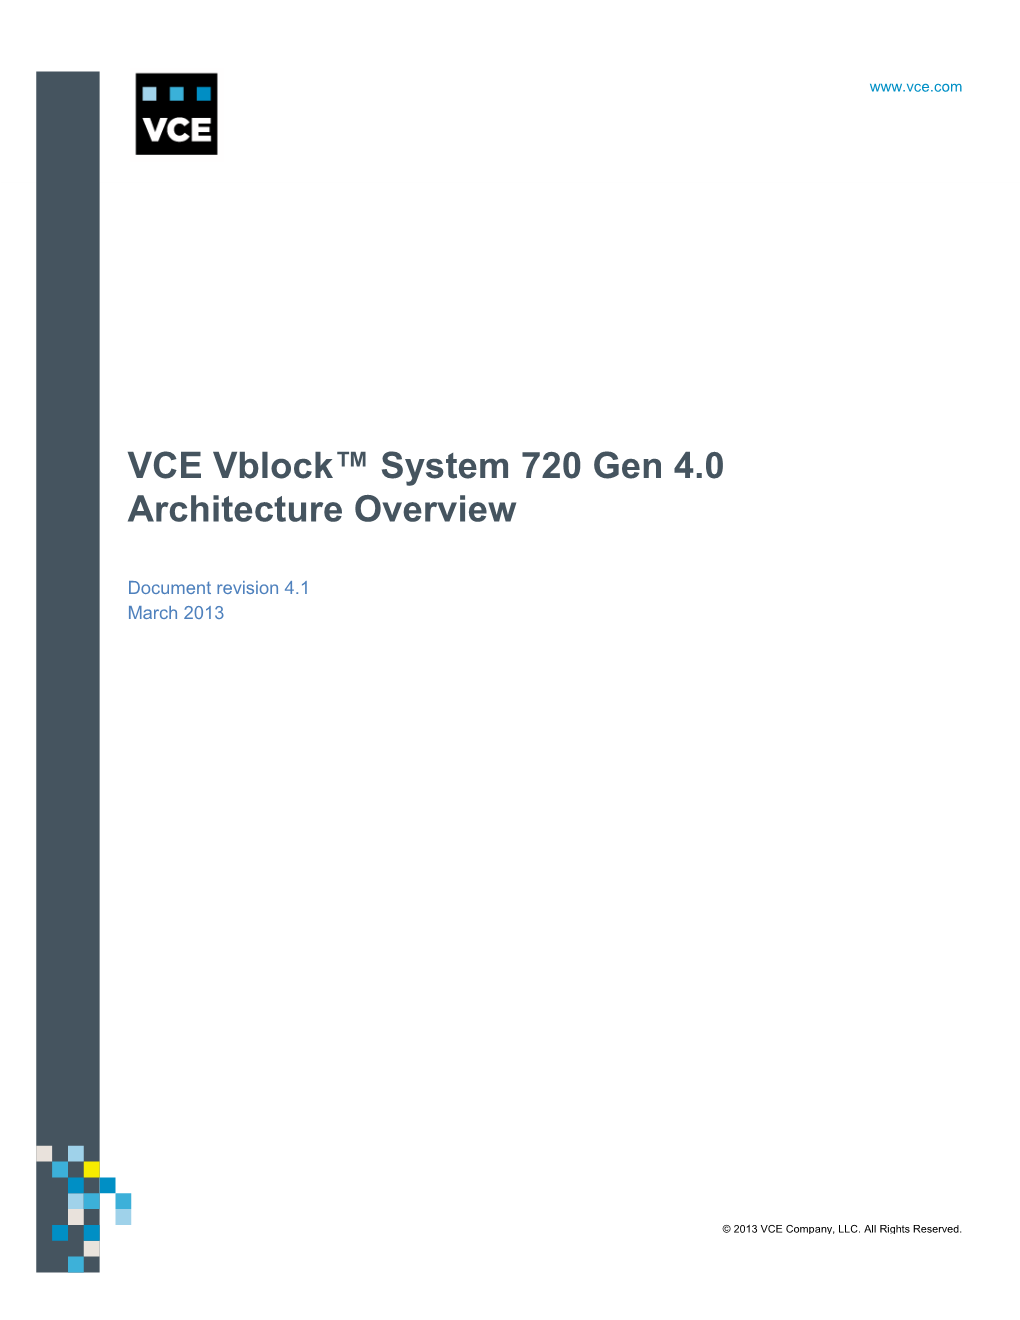 VCE Vblock™ System 720 Gen 4.0 Architecture Overview Revision History